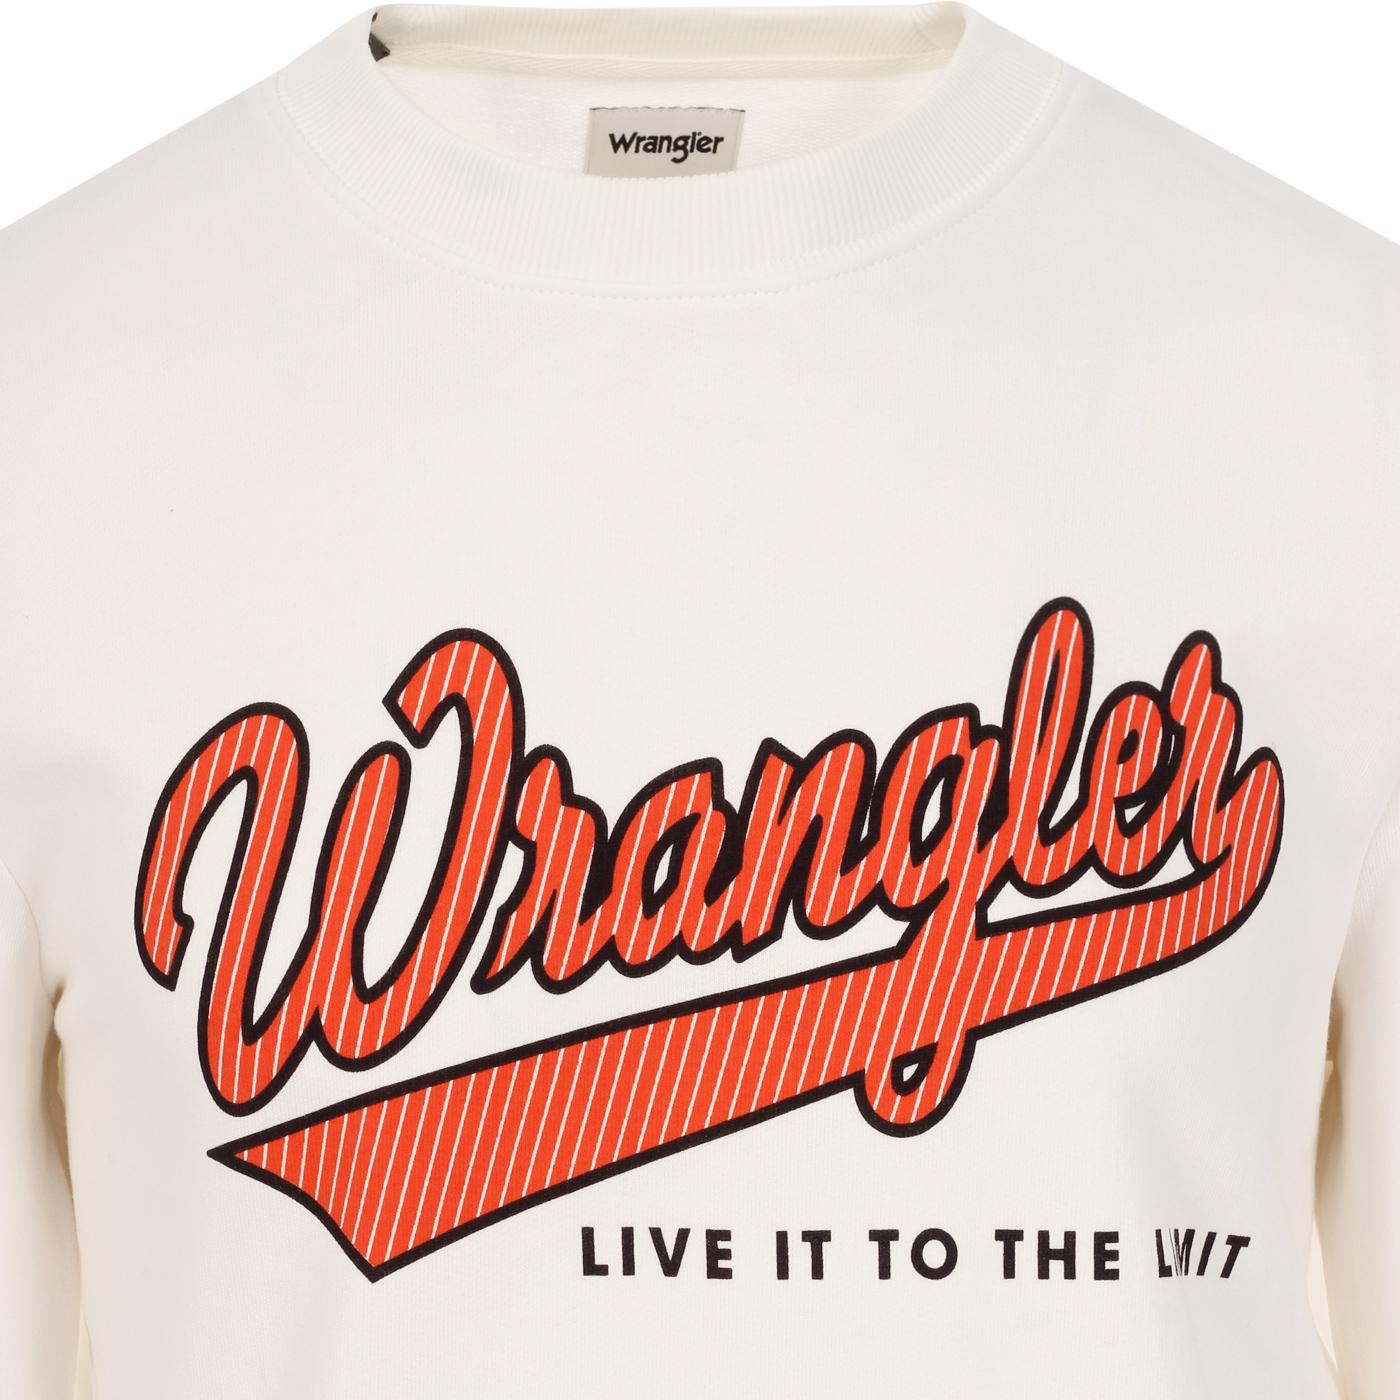 WRANGLER Live It To The Limit Retro 70s Sweatshirt in White